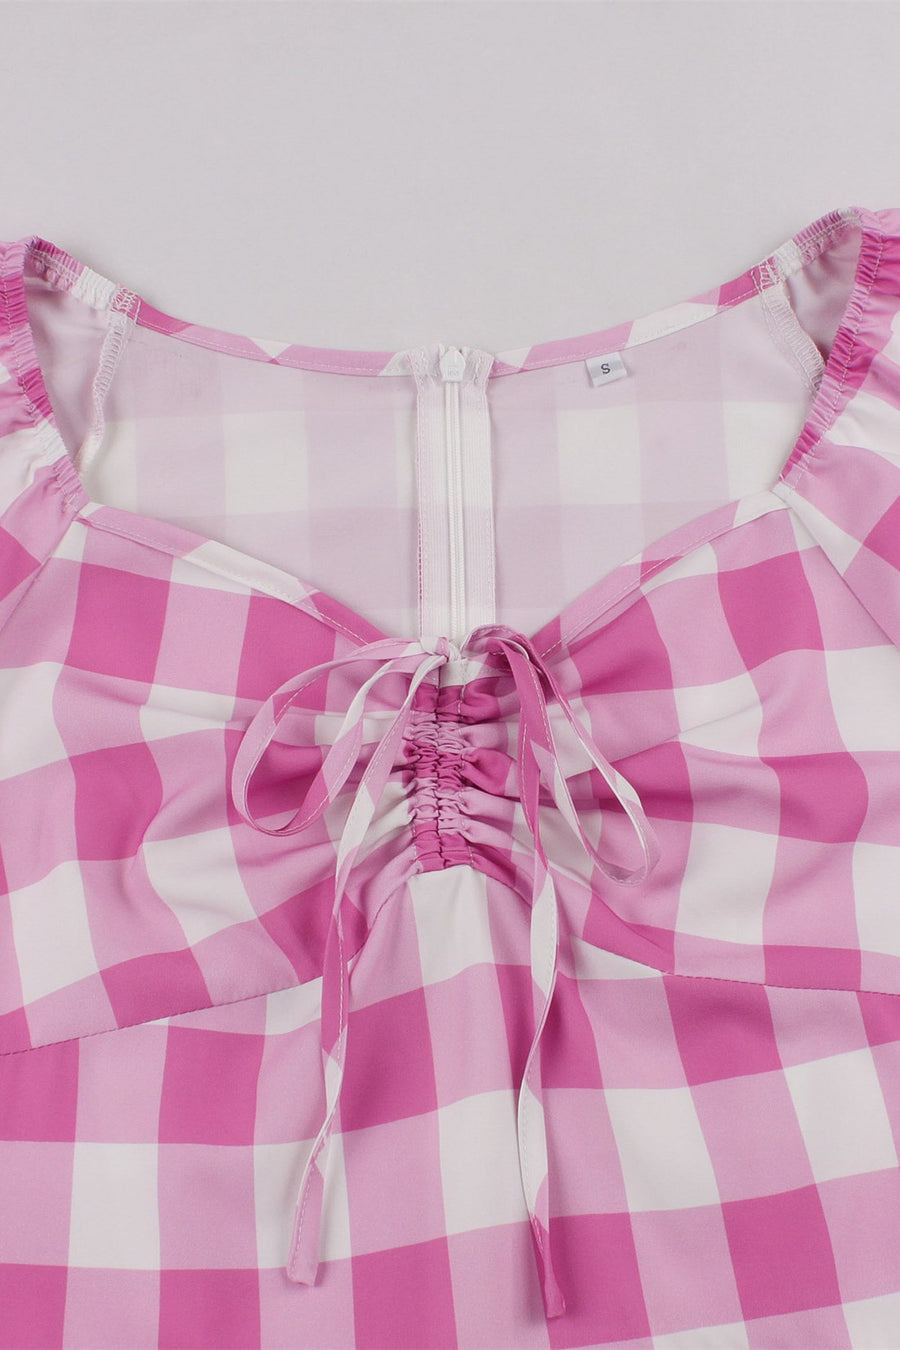 Barbie Pink Gingham Puff Sleeve Midi Dress